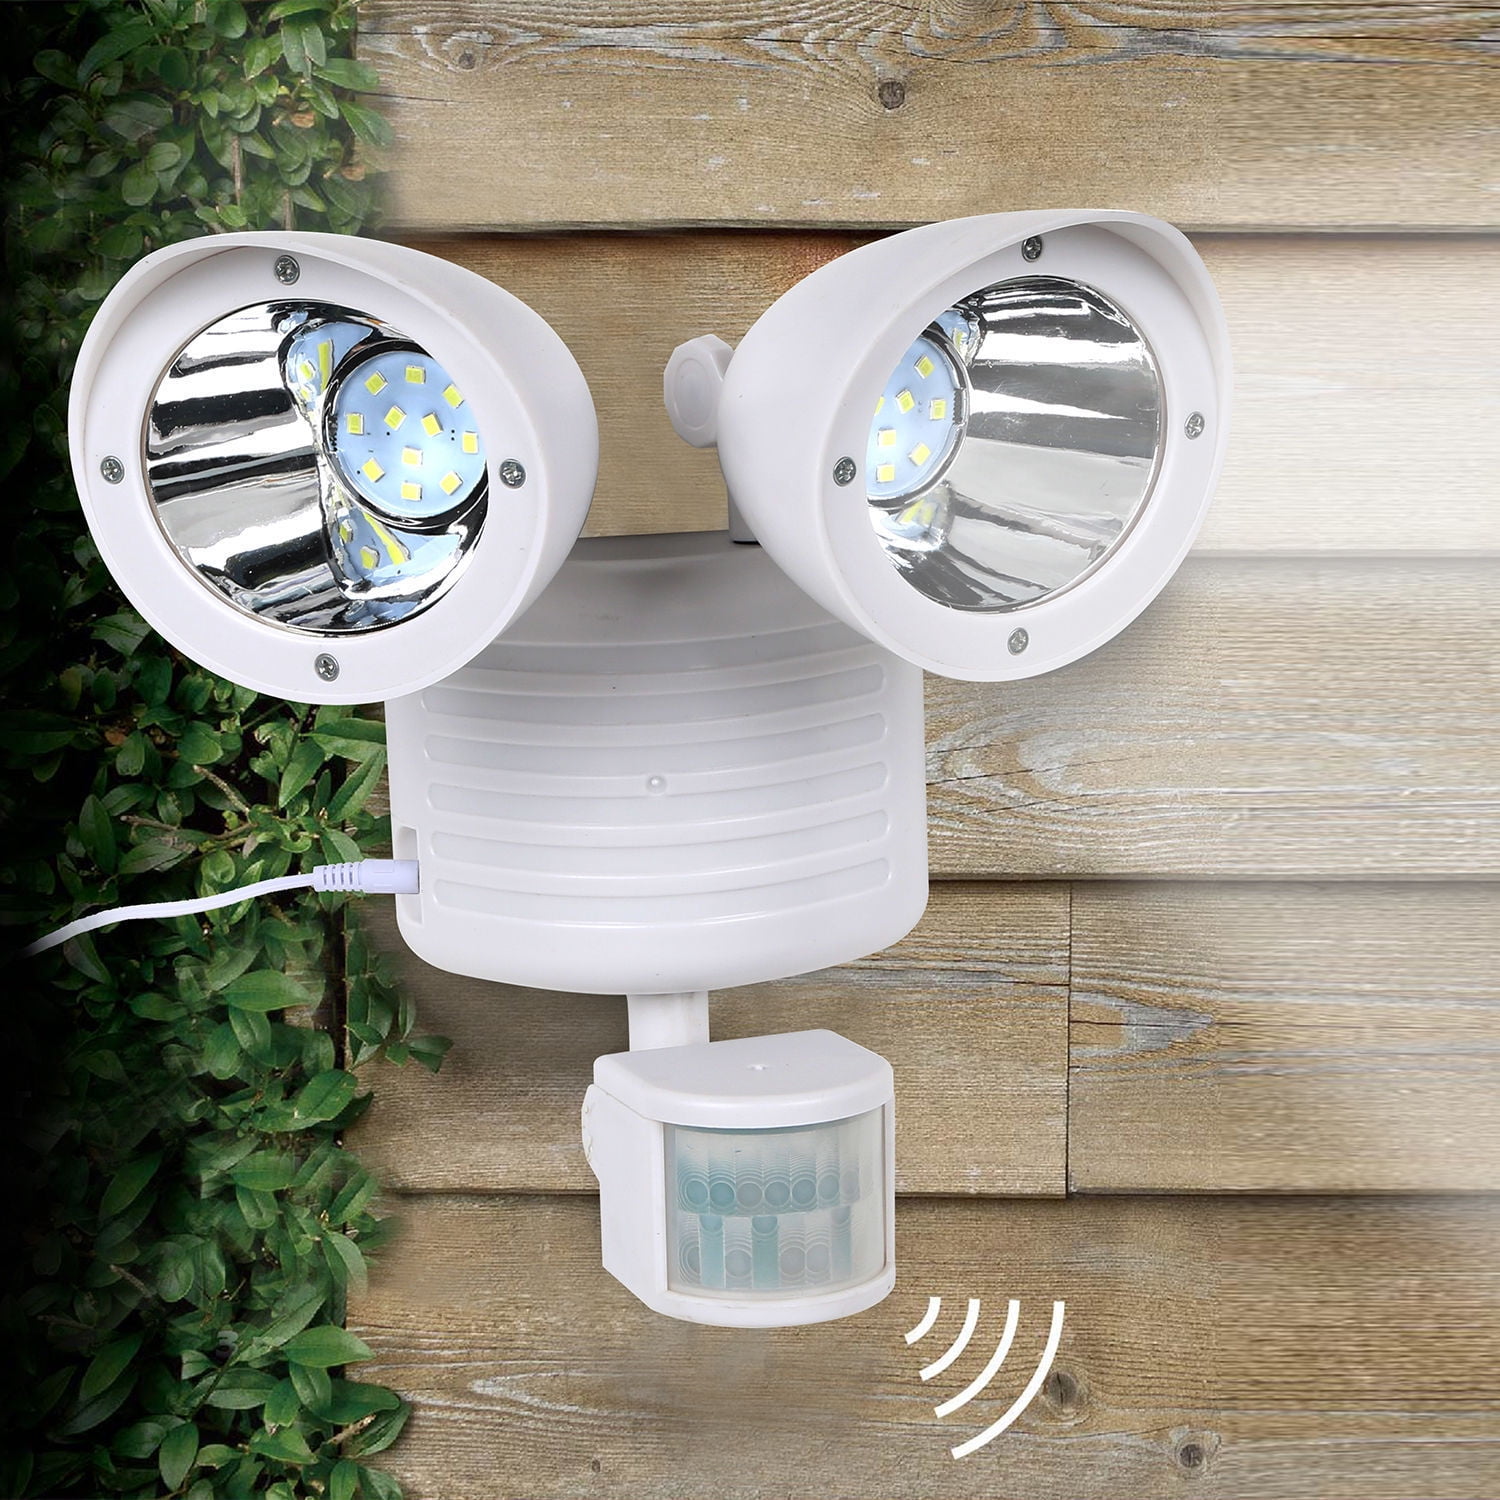 22LED Dual Head Motion Sensor Solar Power Light Security Floodlight Outdoor Lamp 